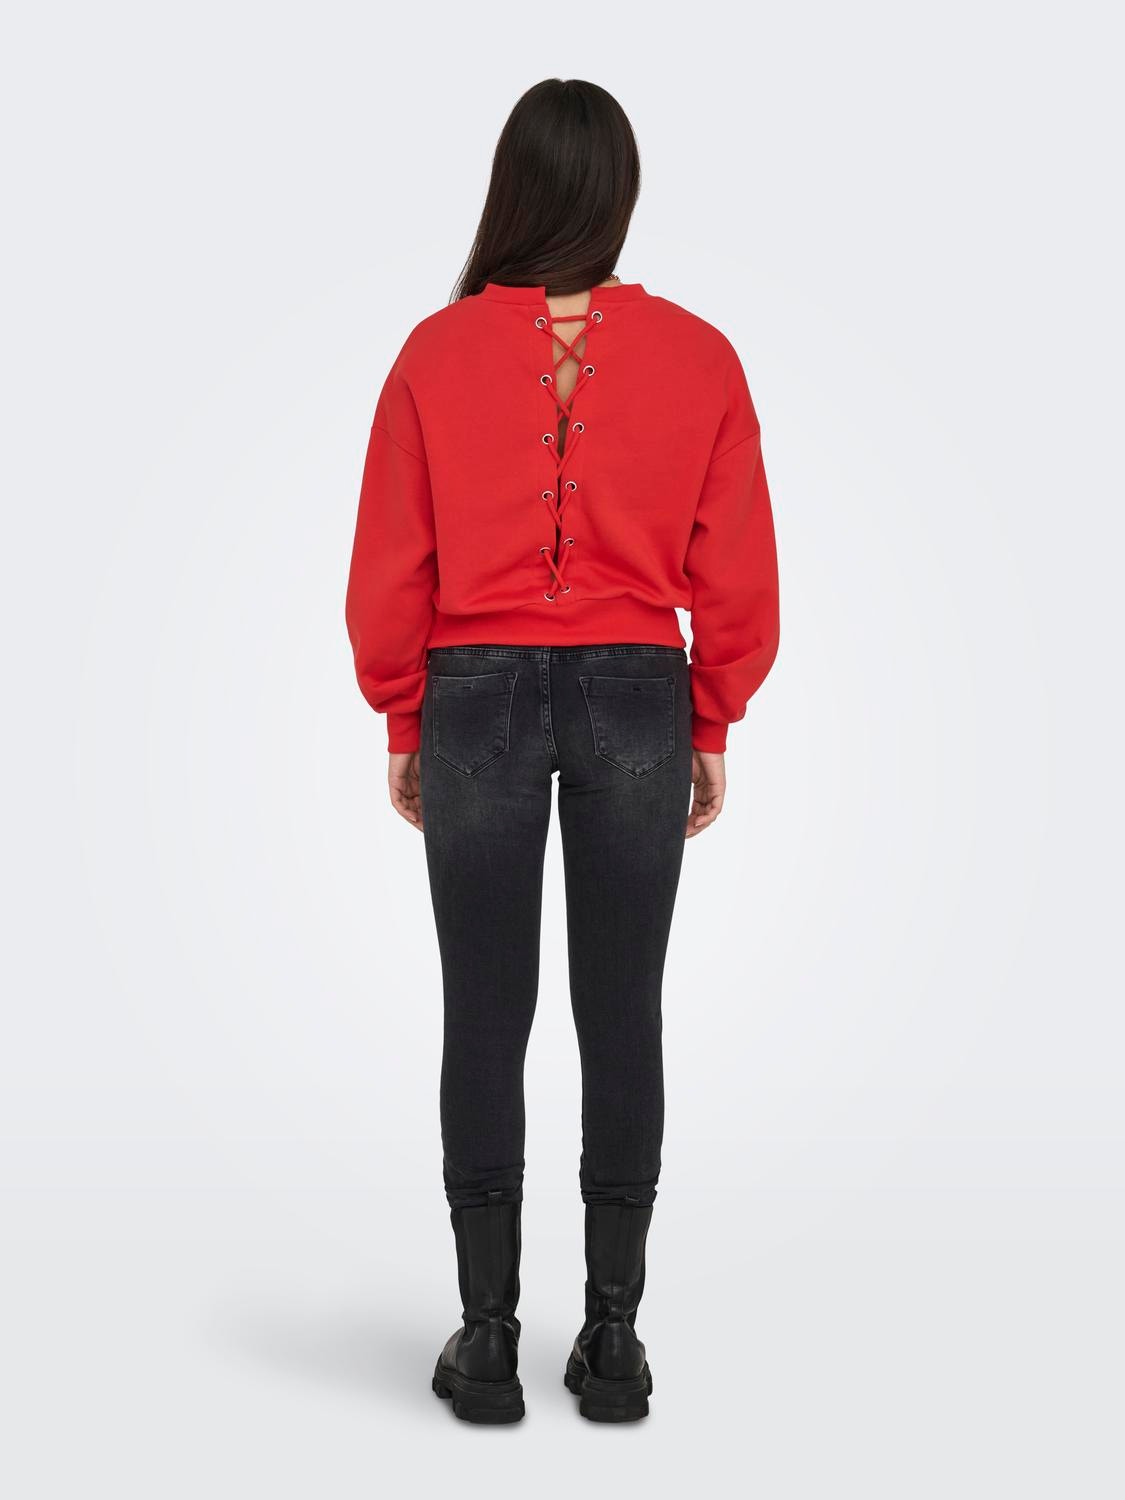 ONLY Regular Fit Round Neck Sweatshirt -Flame Scarlet - 15315408